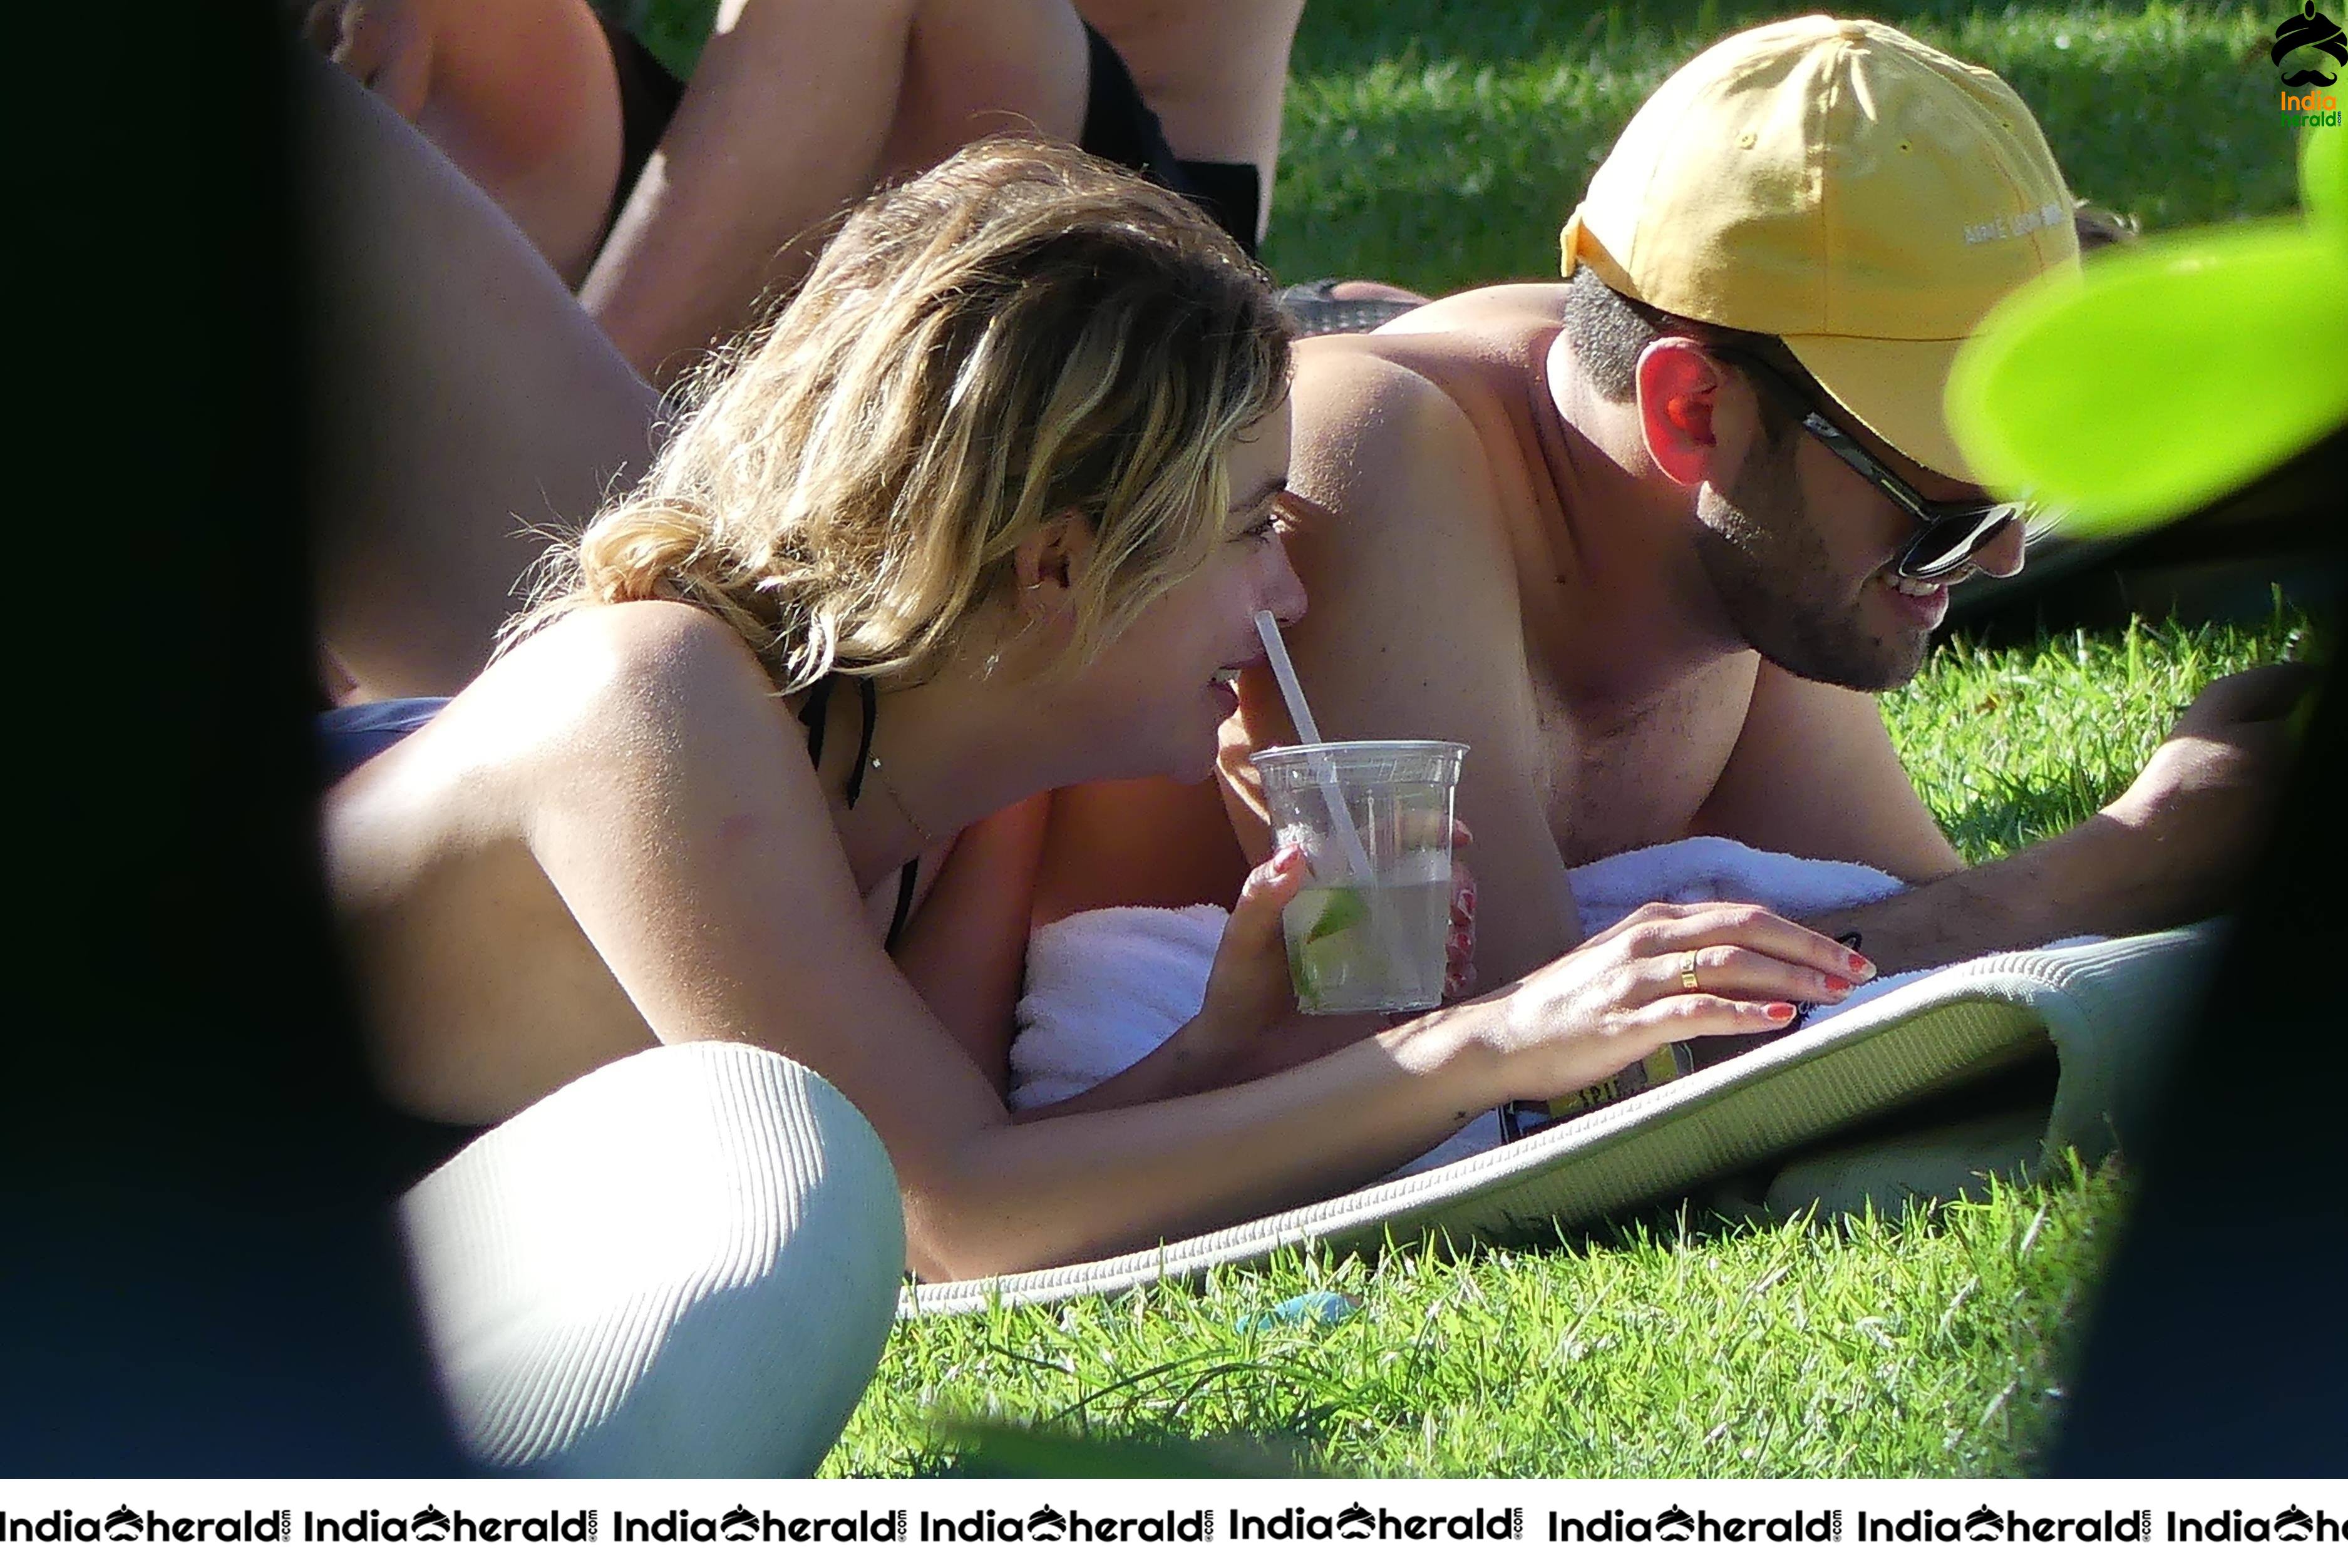 Ashley Benson Caught Smoking and Sunbathing in a Bikini in Miami Set 2